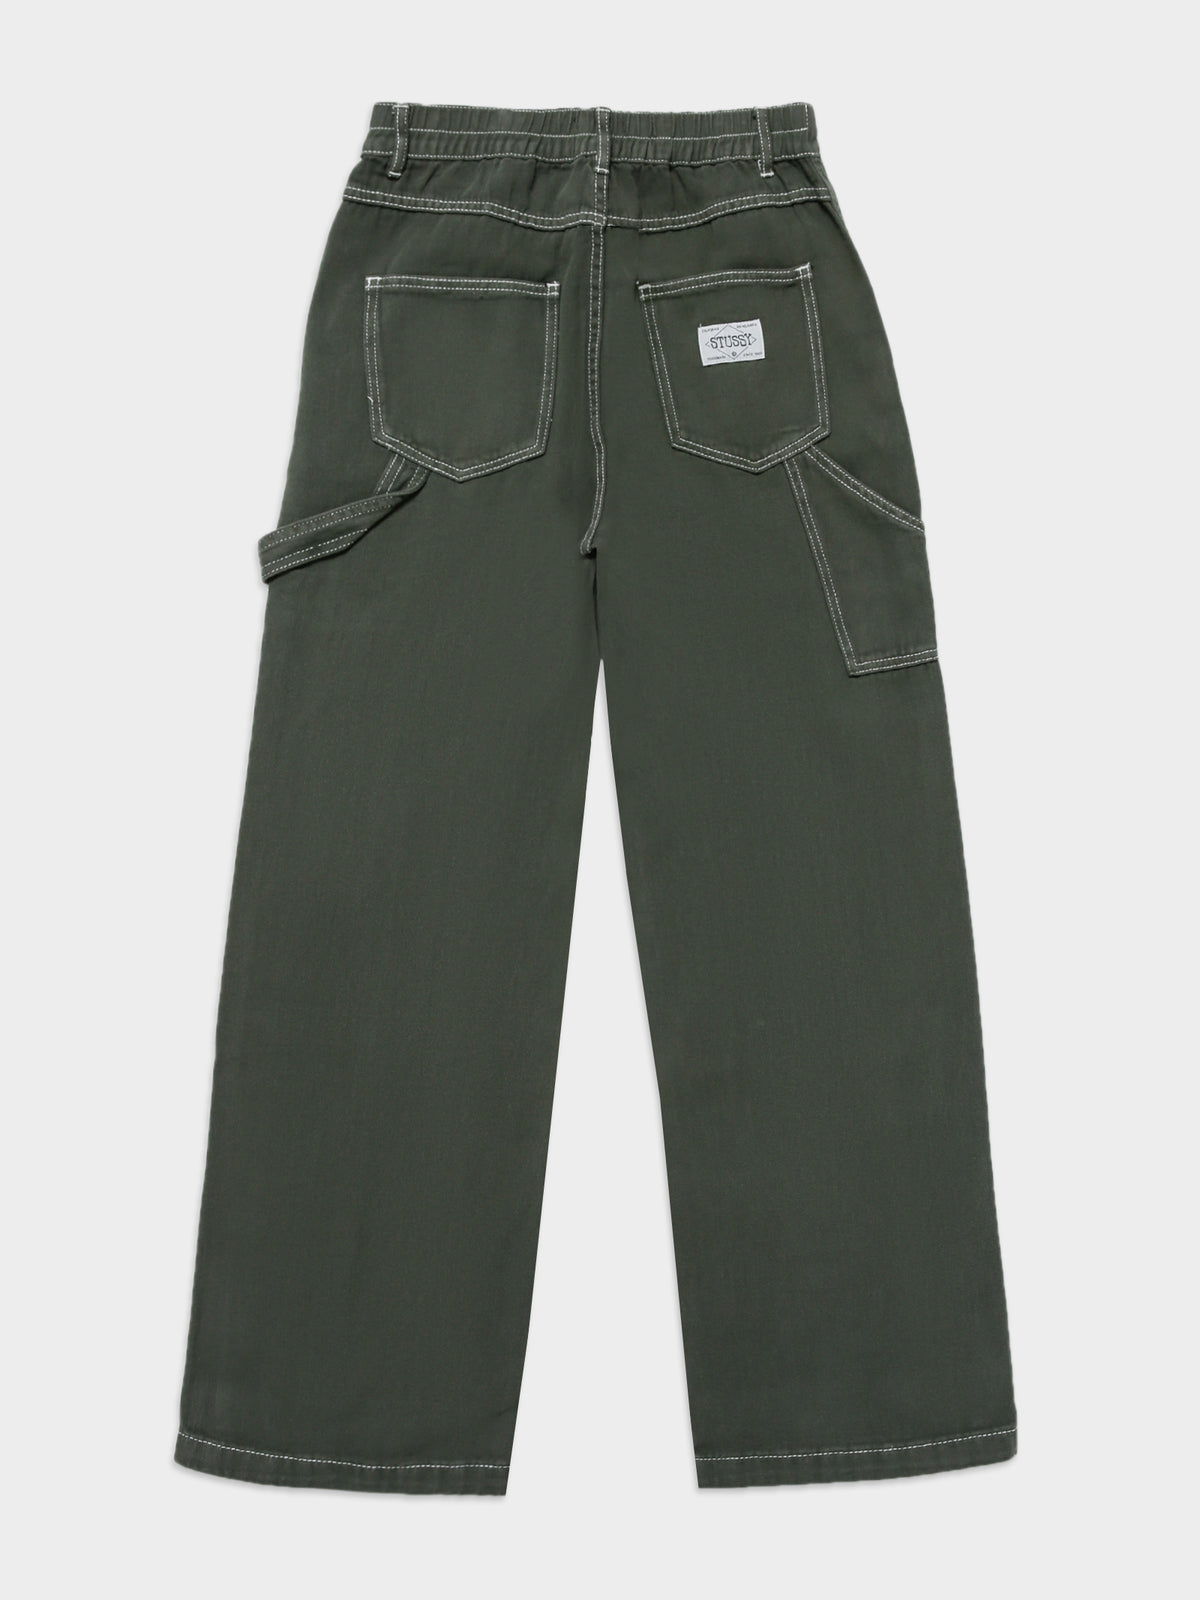 Nevada Carpenter Jeans in Fern Green